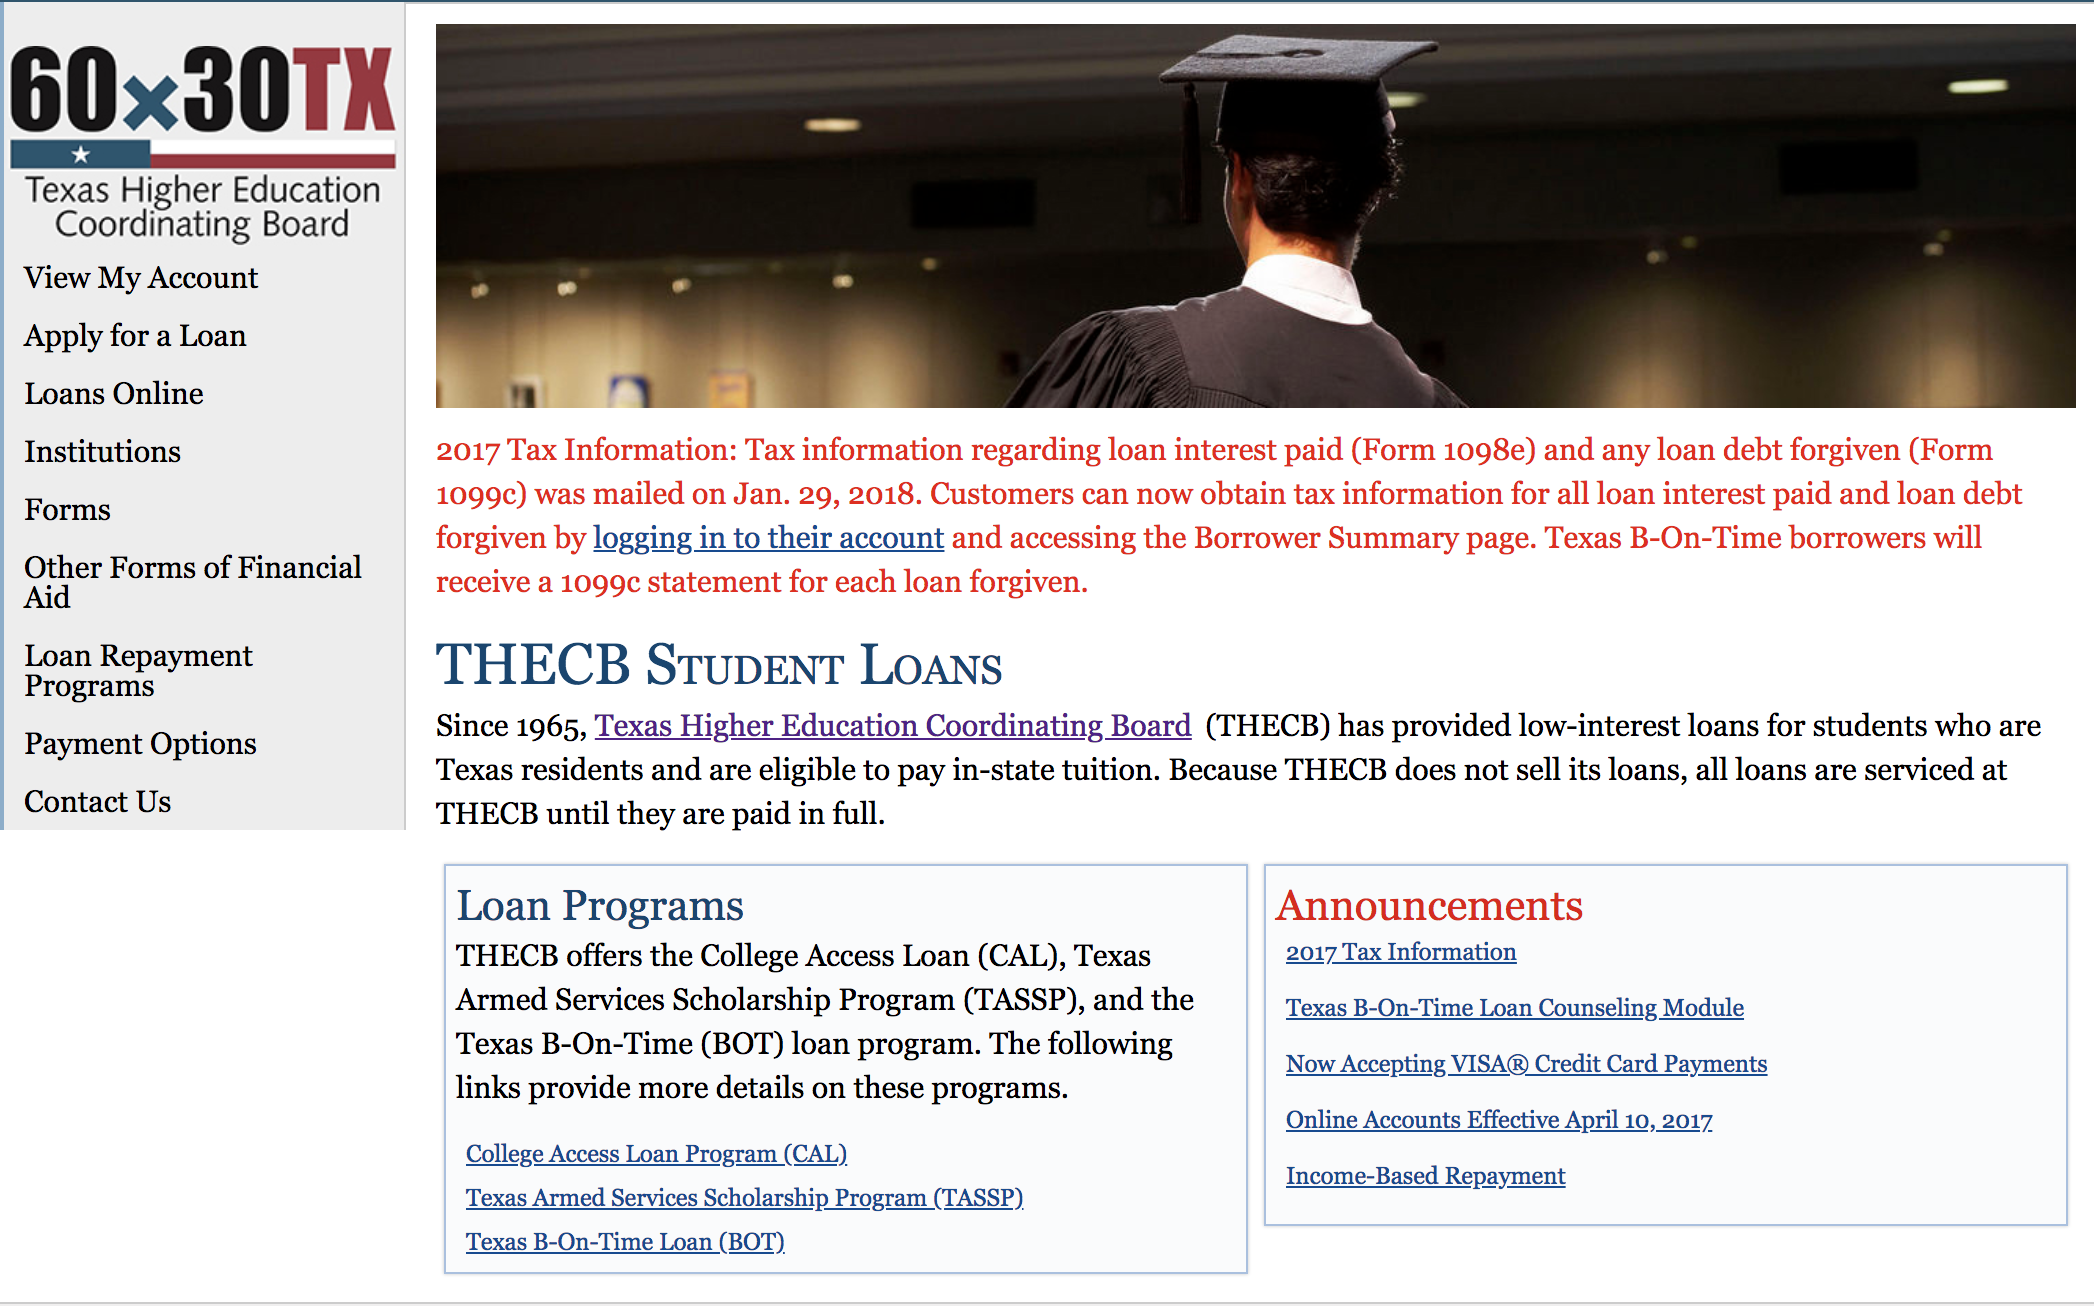 Screenshot of THECB homepage: Man in grad cap, 60x30TX logo